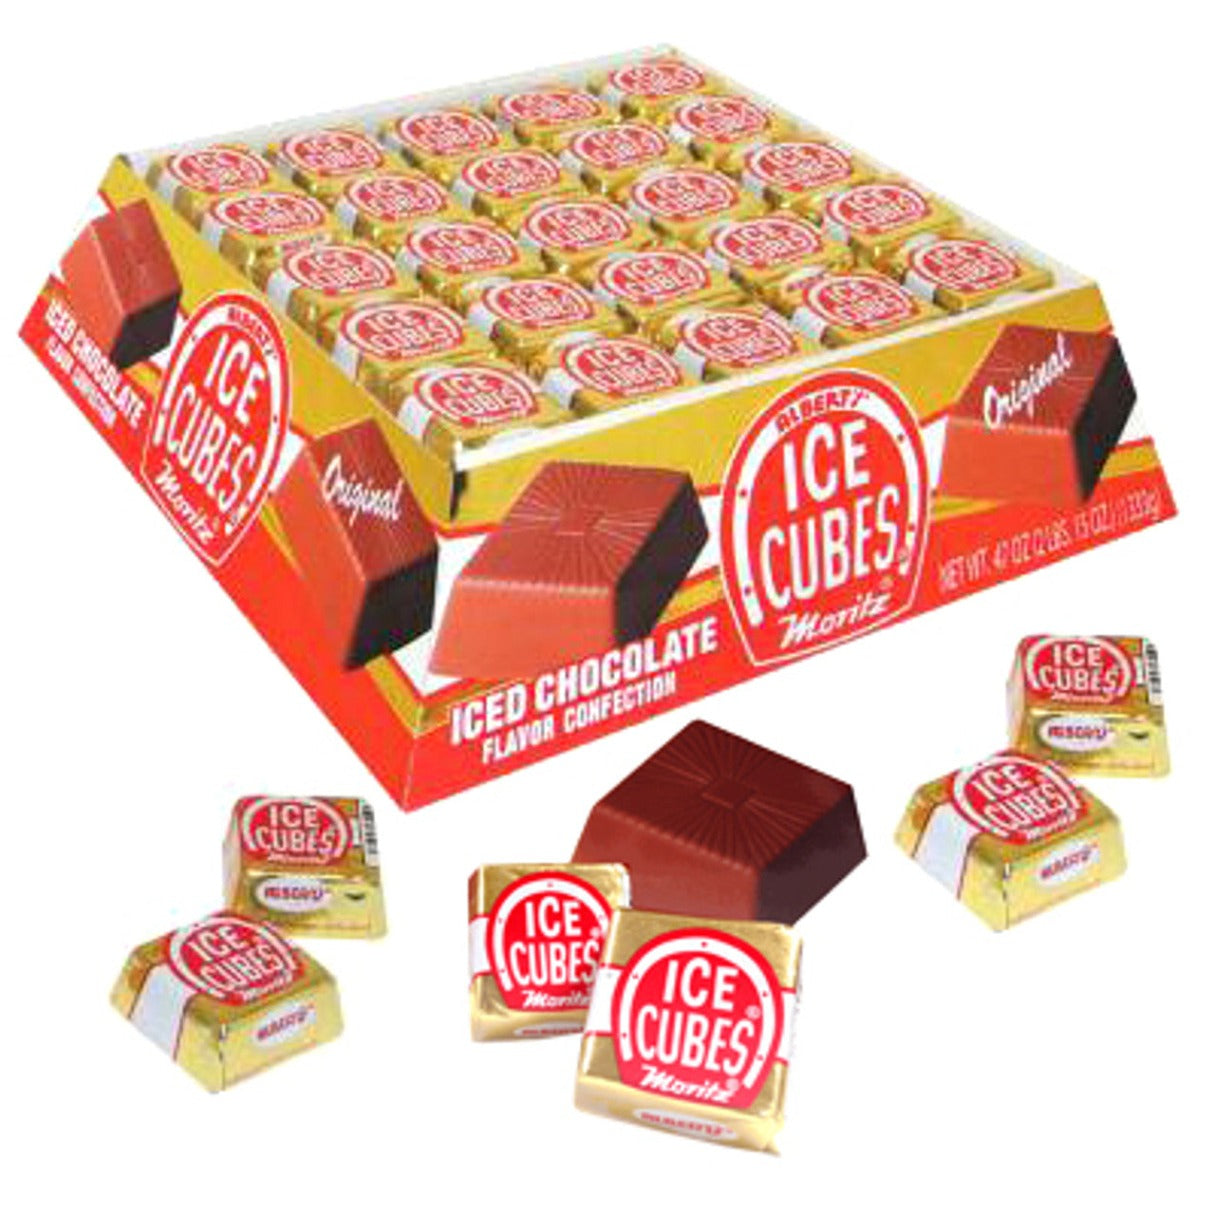 Albert's Chocolate Ice Cubes Box 39.2oz - 100ct